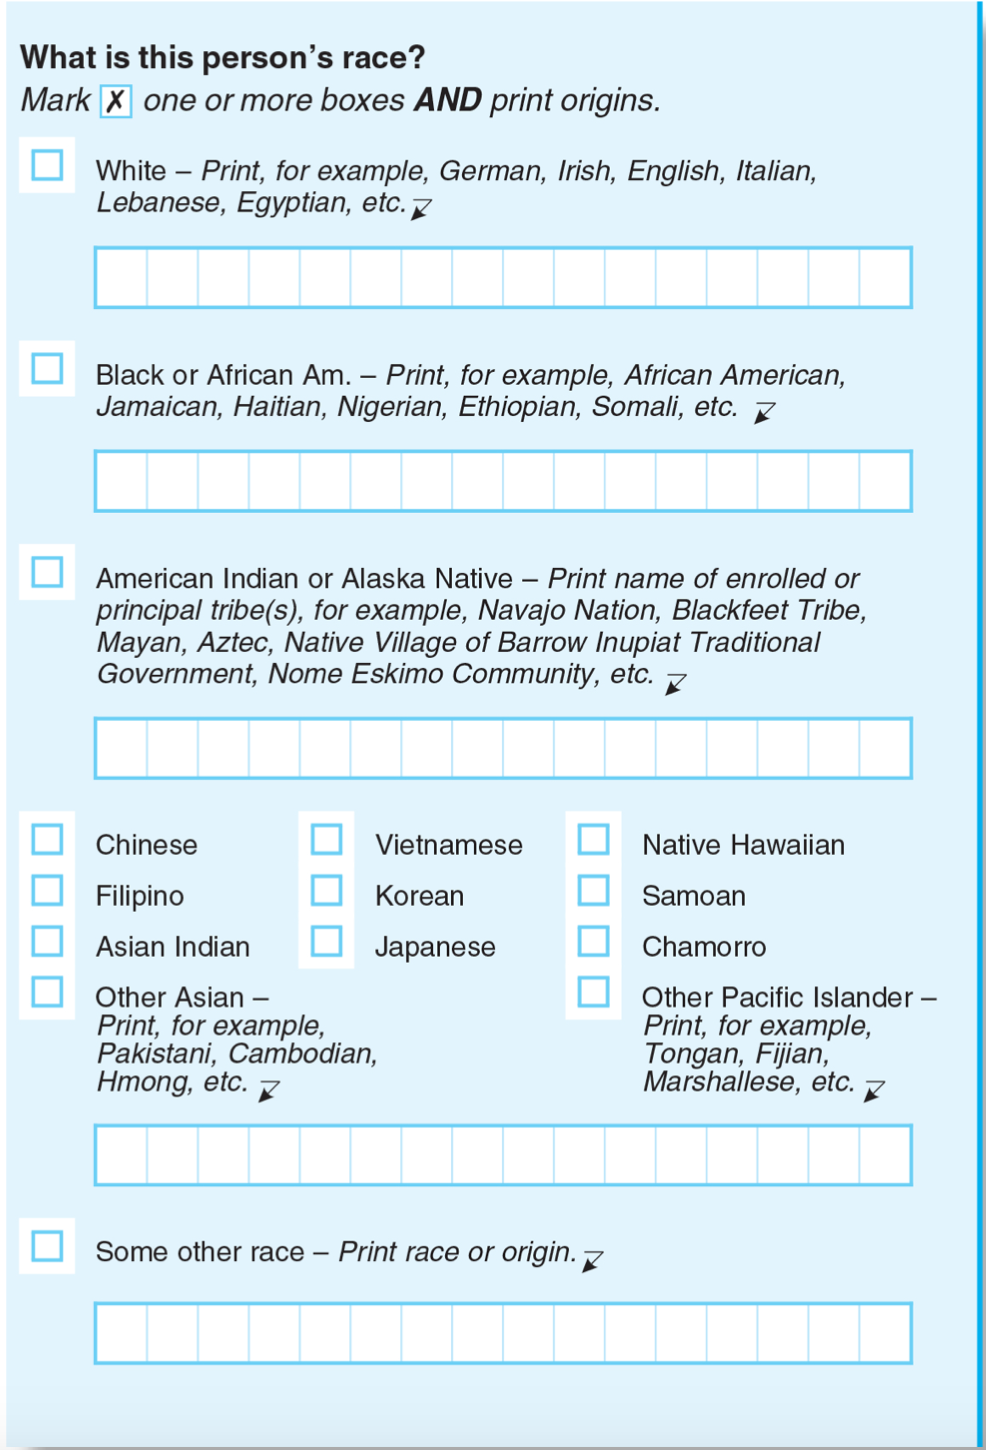 Questionnaire du recensement américain.